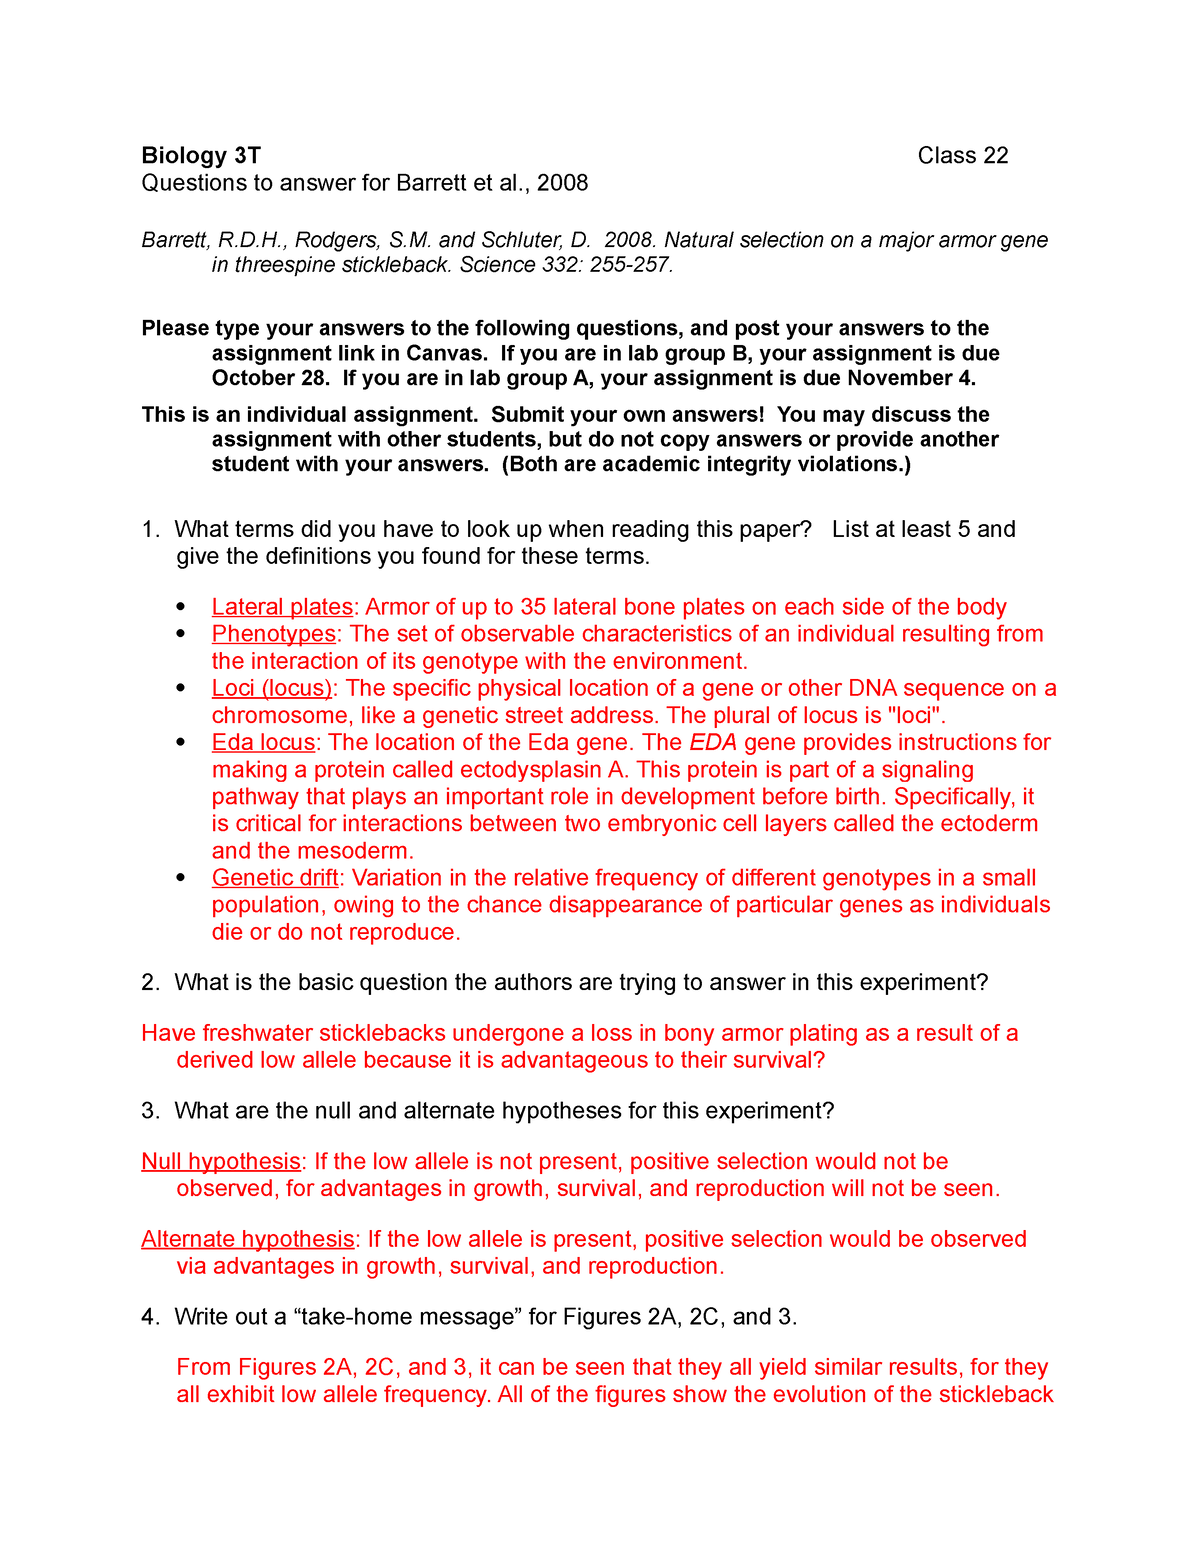 Class 22 Barrett Et Al 2008 Questions Fall 2020 2 Biology 3t